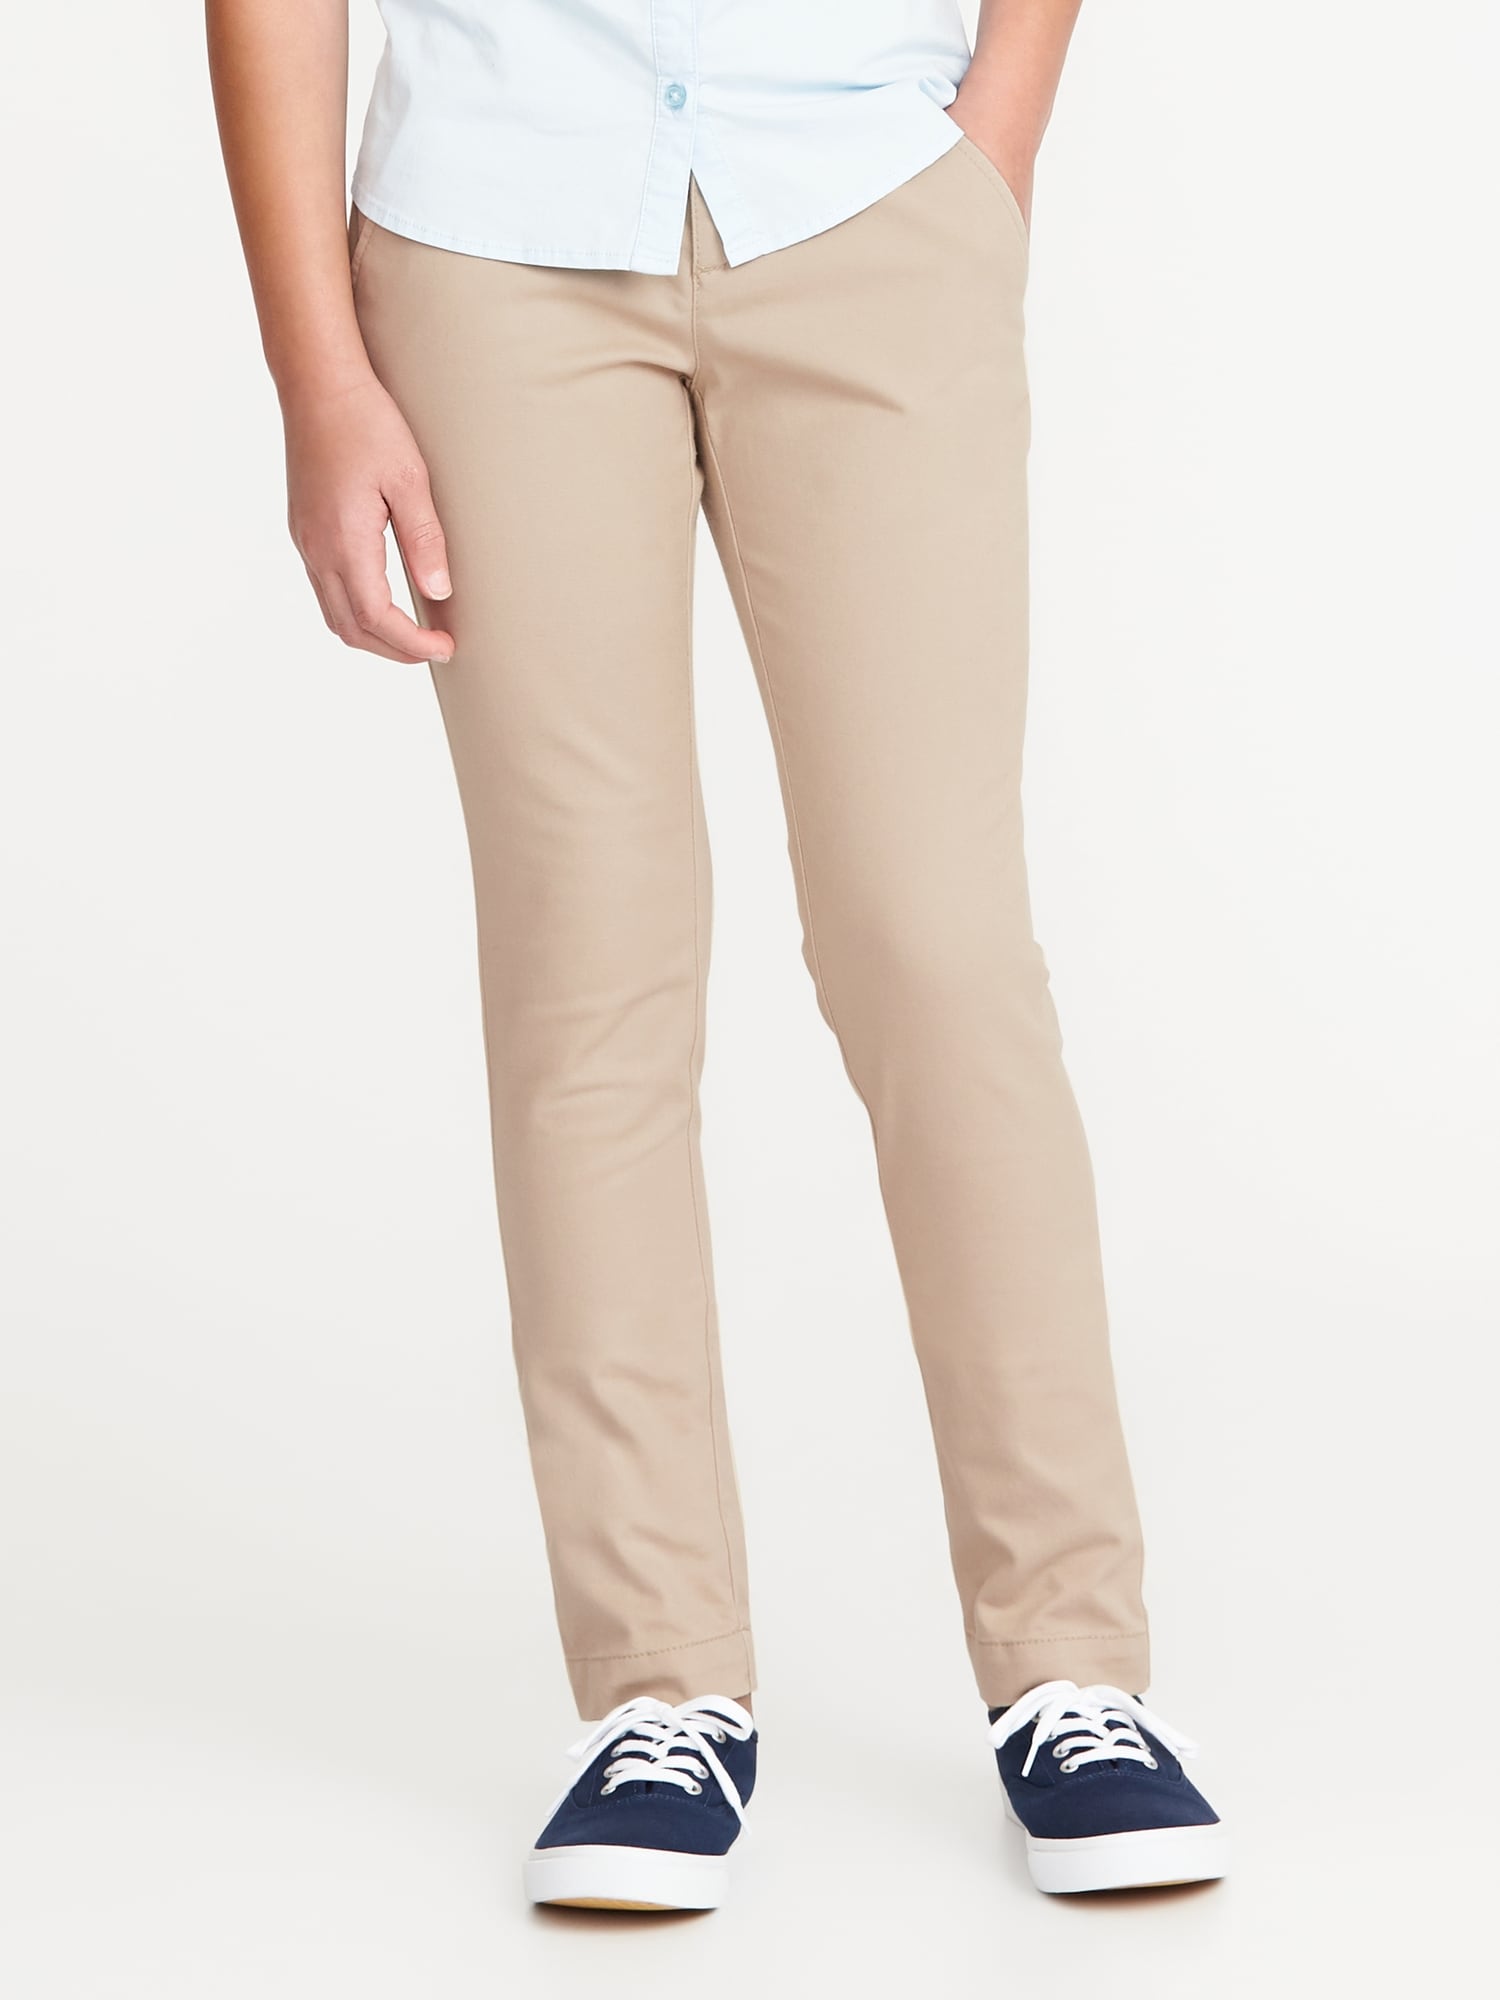 Skinny Uniform Pants - Navy, Fashion Nova, Pants